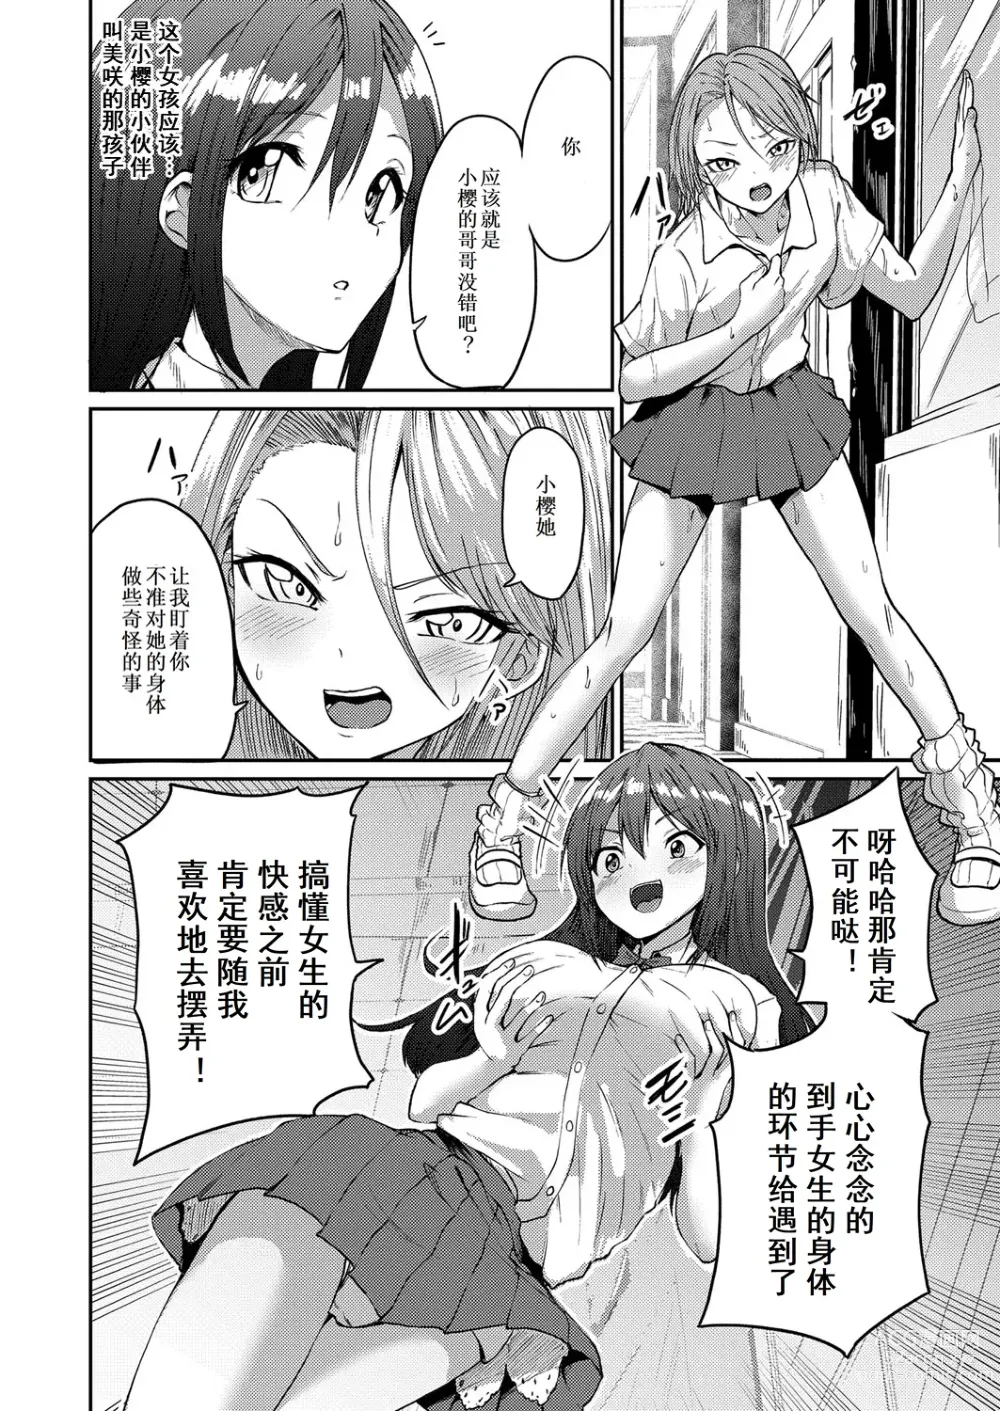 Page 2 of manga IREKAWARI